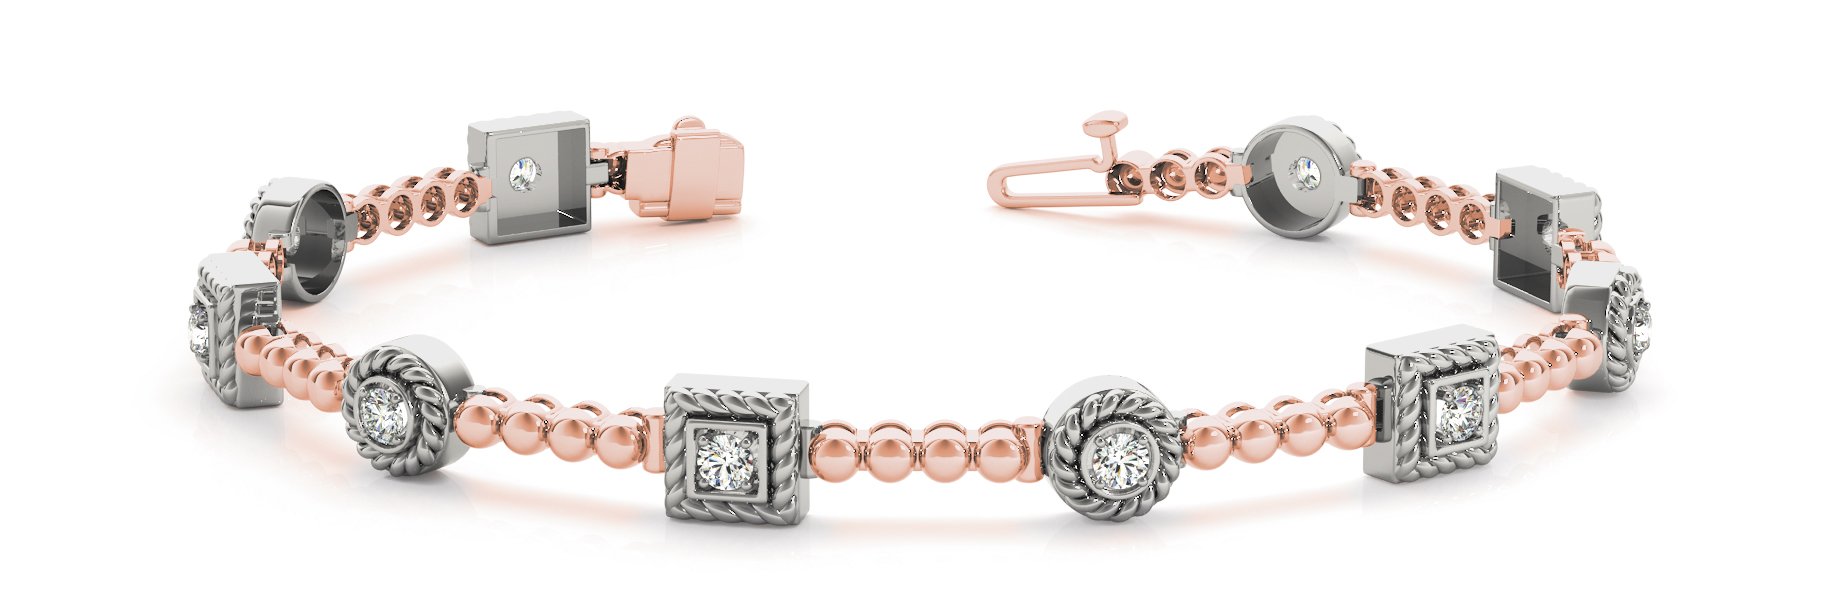 Fancy Diamond Bracelet Ladies 0.47ct tw - 14kt Gold